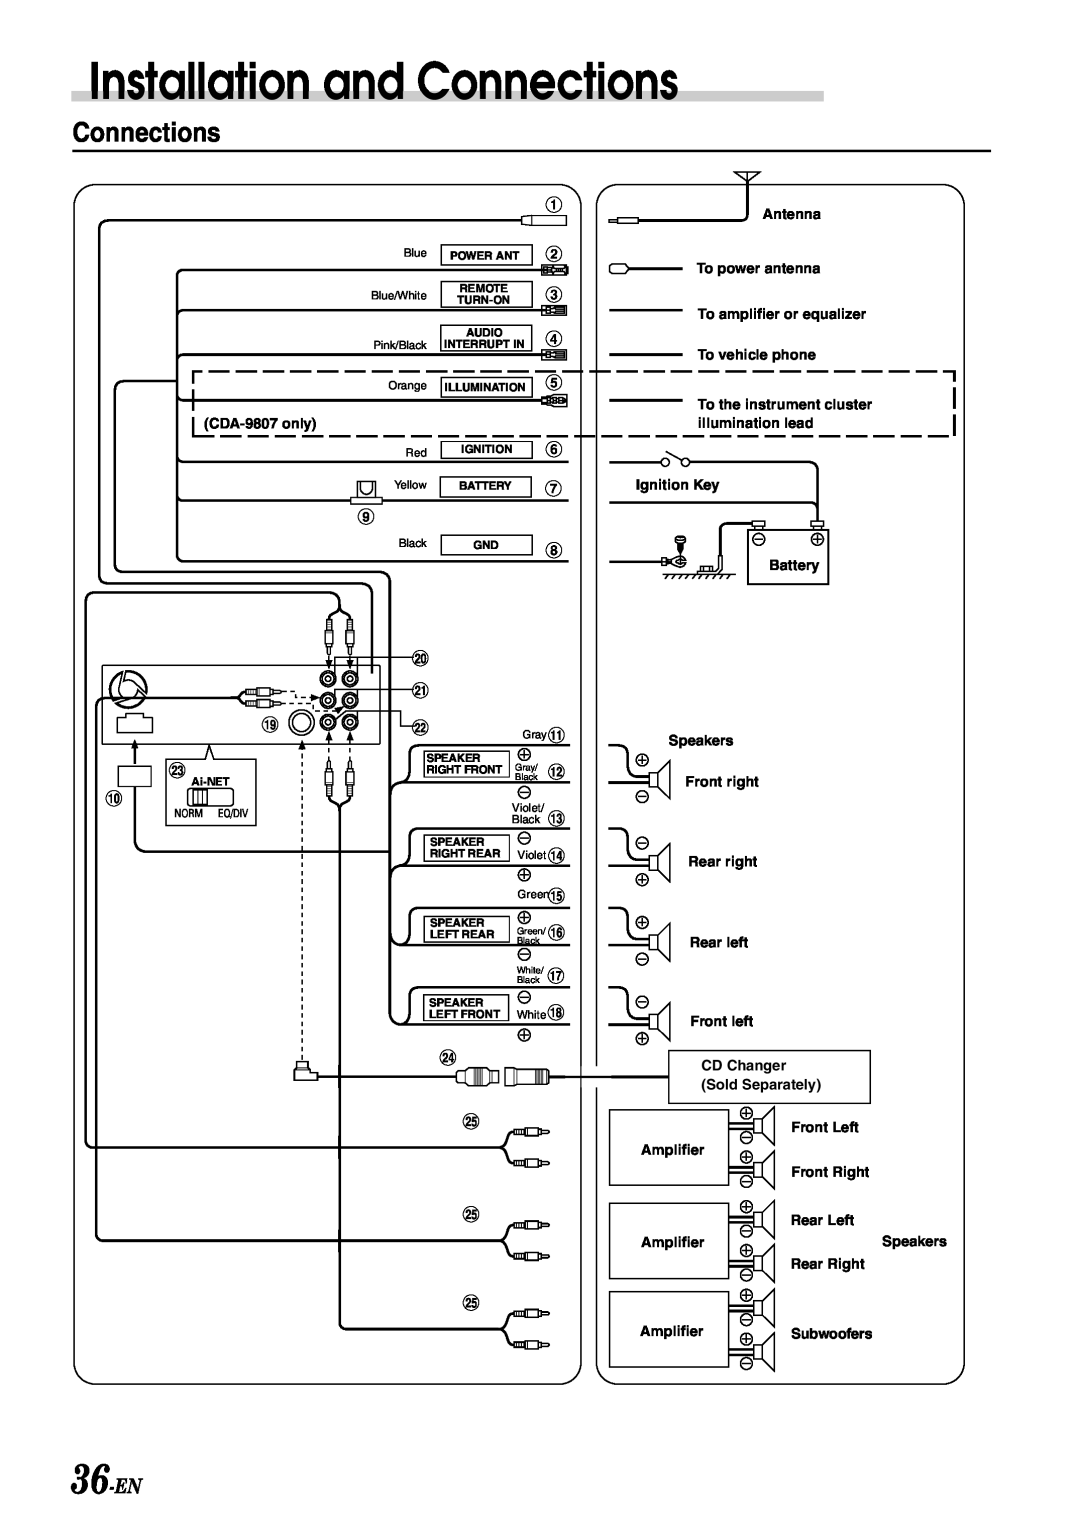 Alpine CDA-9807, cda-9805 owner manual 36-EN, Installation and Connections 